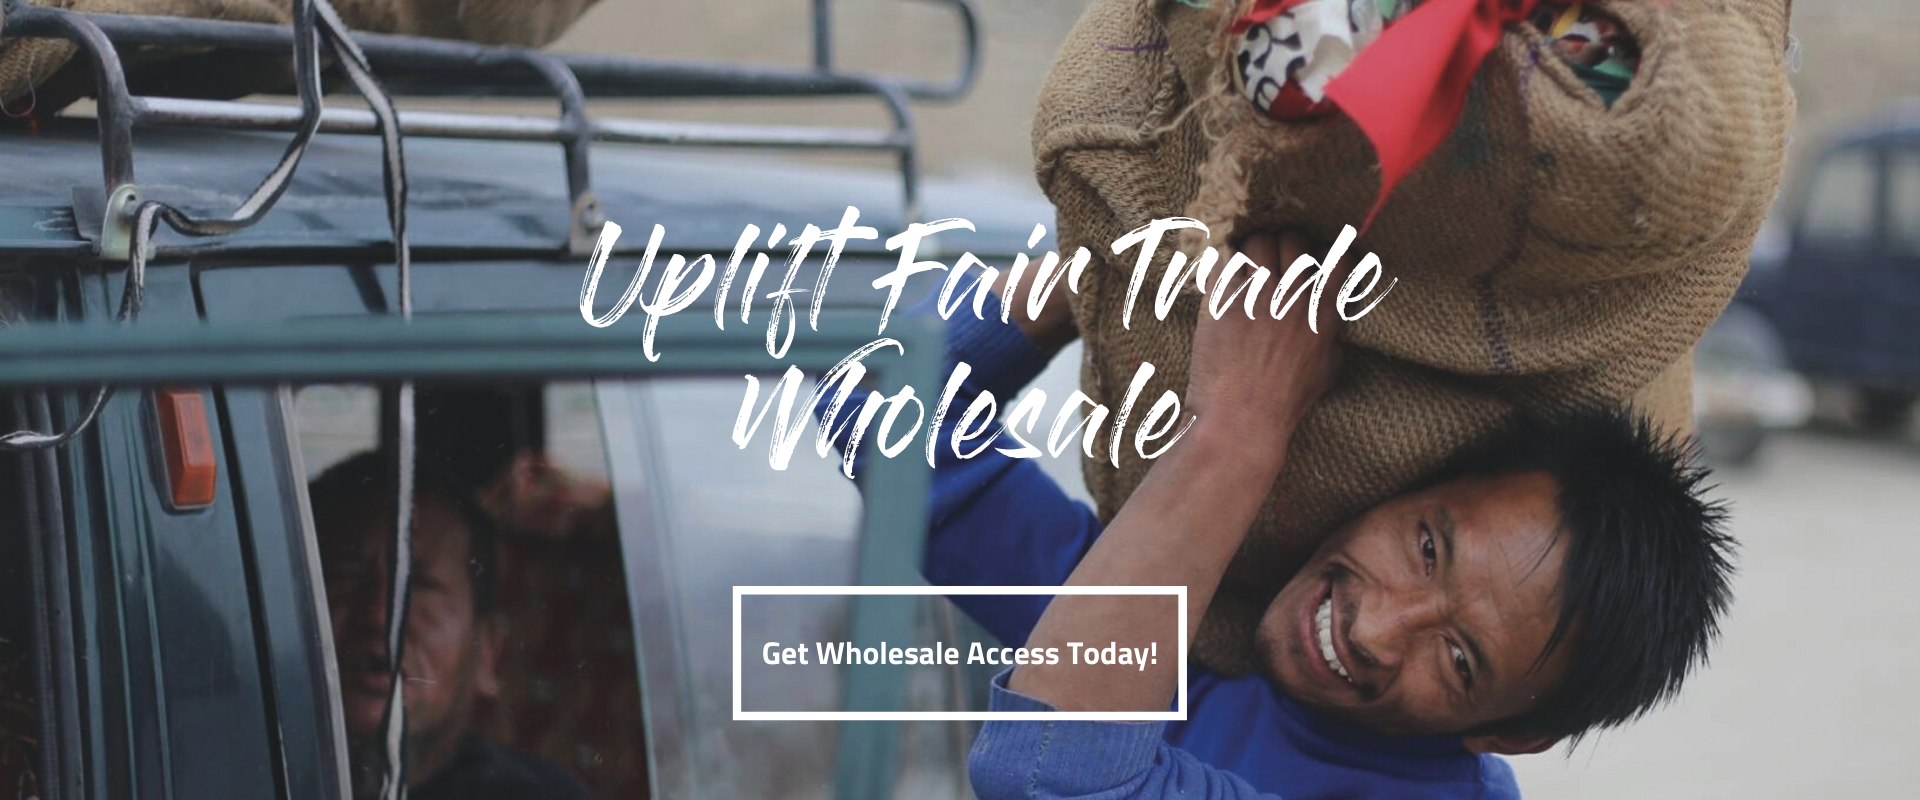 Uplift Fair Trade Wholesale